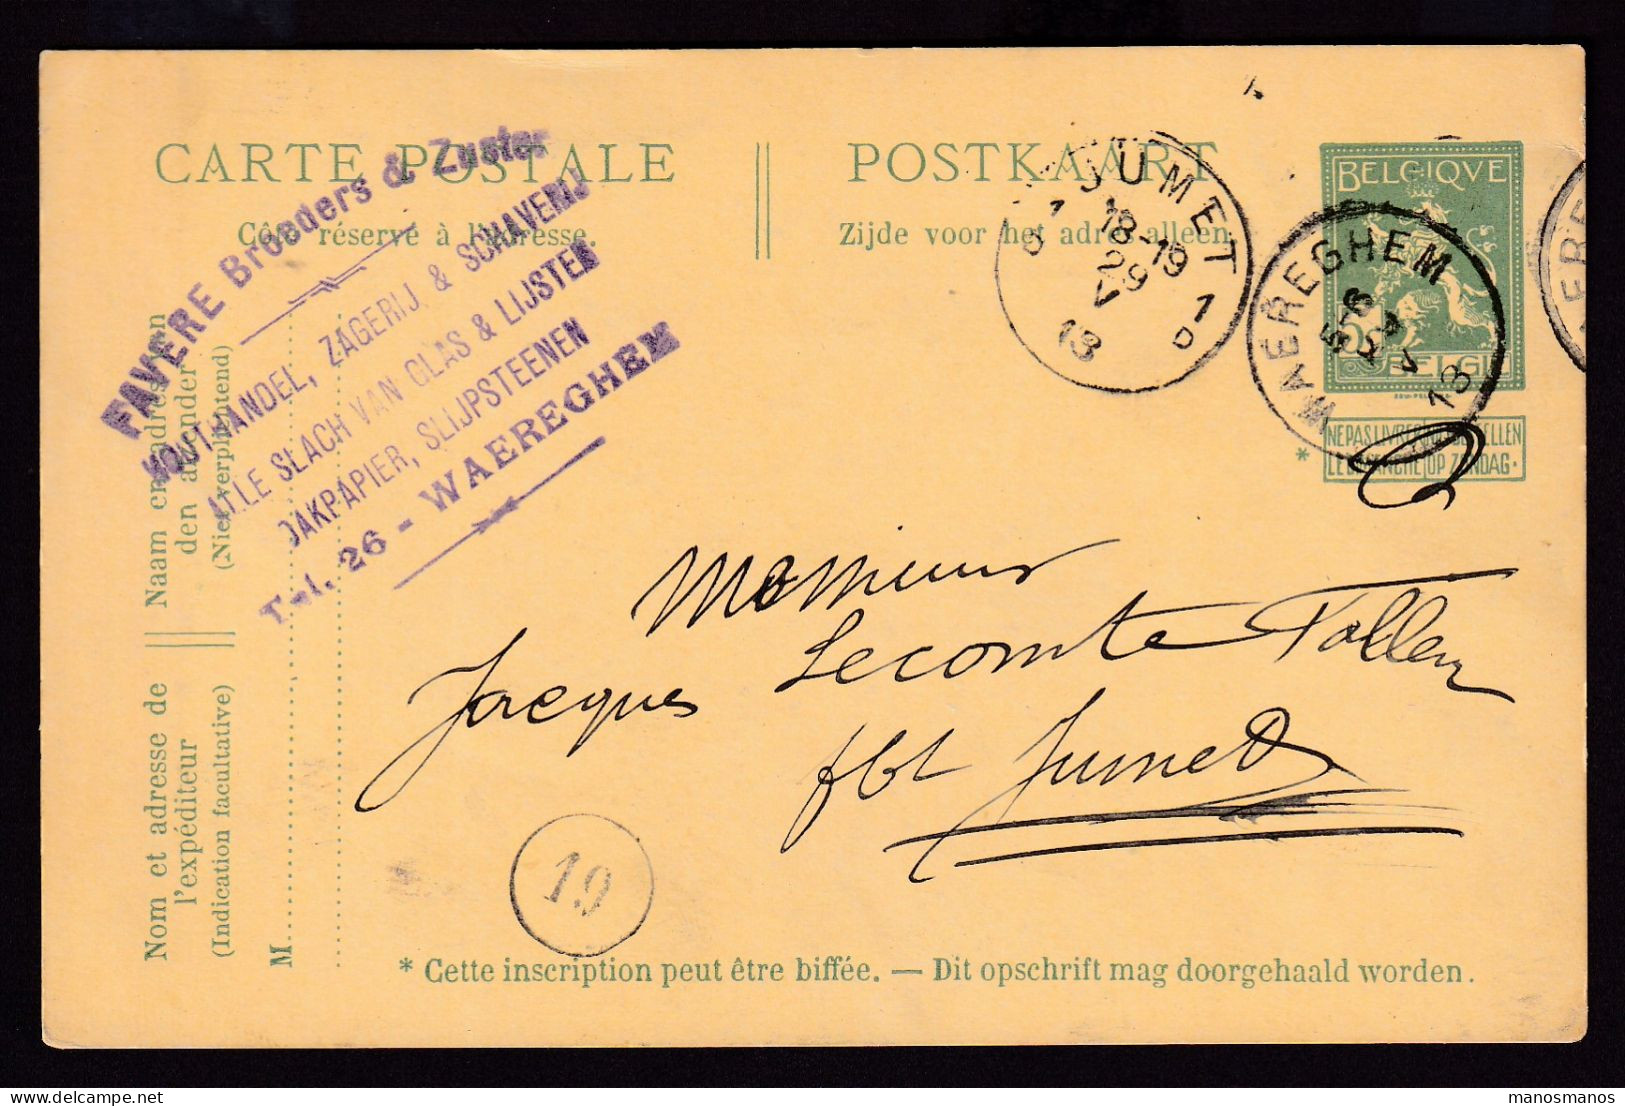 DDFF 617 -  Entier Pellens T2R WAEREGHEM 1913 Vers JUMET - Cachet Privé Favere Broeders, Houthandel, Zagerij, ... - Postcards 1909-1934